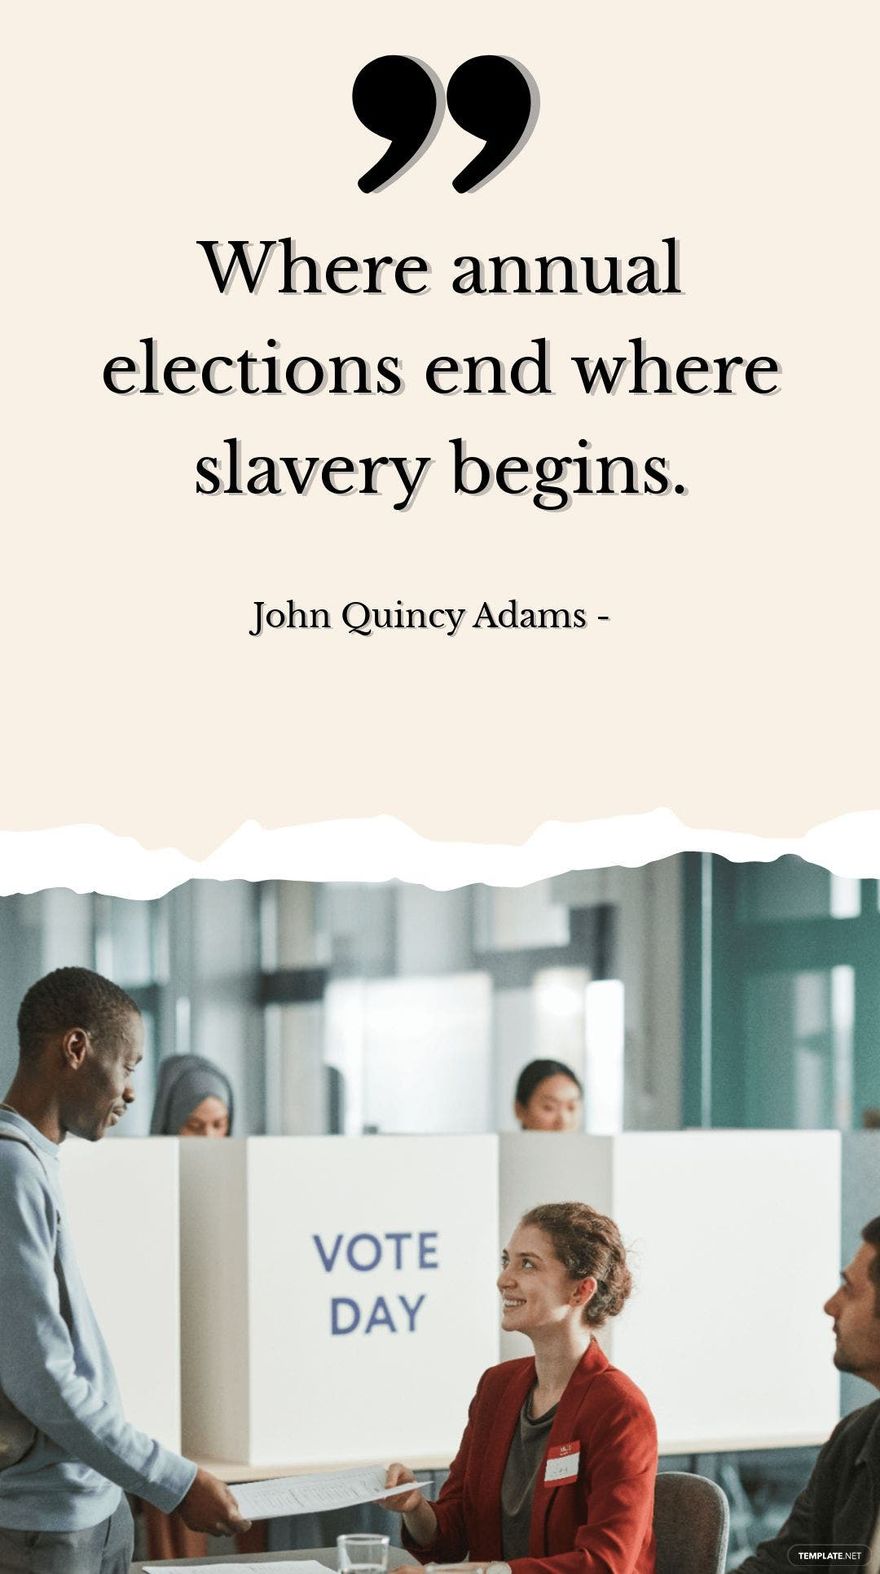 John Quincy Adams - Where annual elections end where slavery begins.